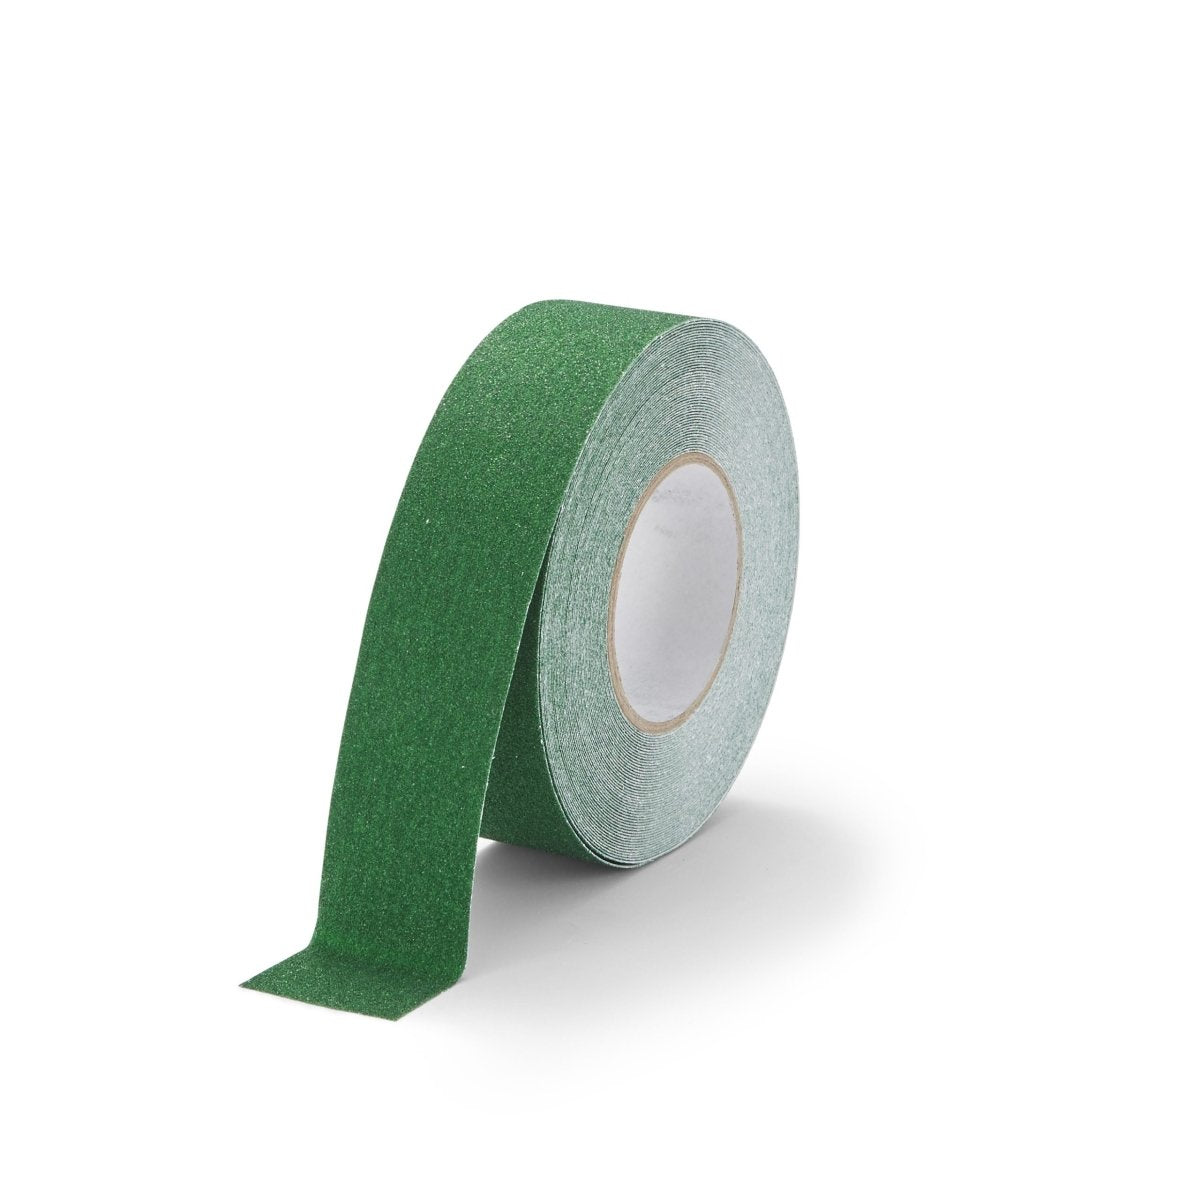 Course Grade Anti Slip Tape Rolls 18m - Slips Away - H3402V Safety-Grip Coarse - Green-50mm-1-1 -